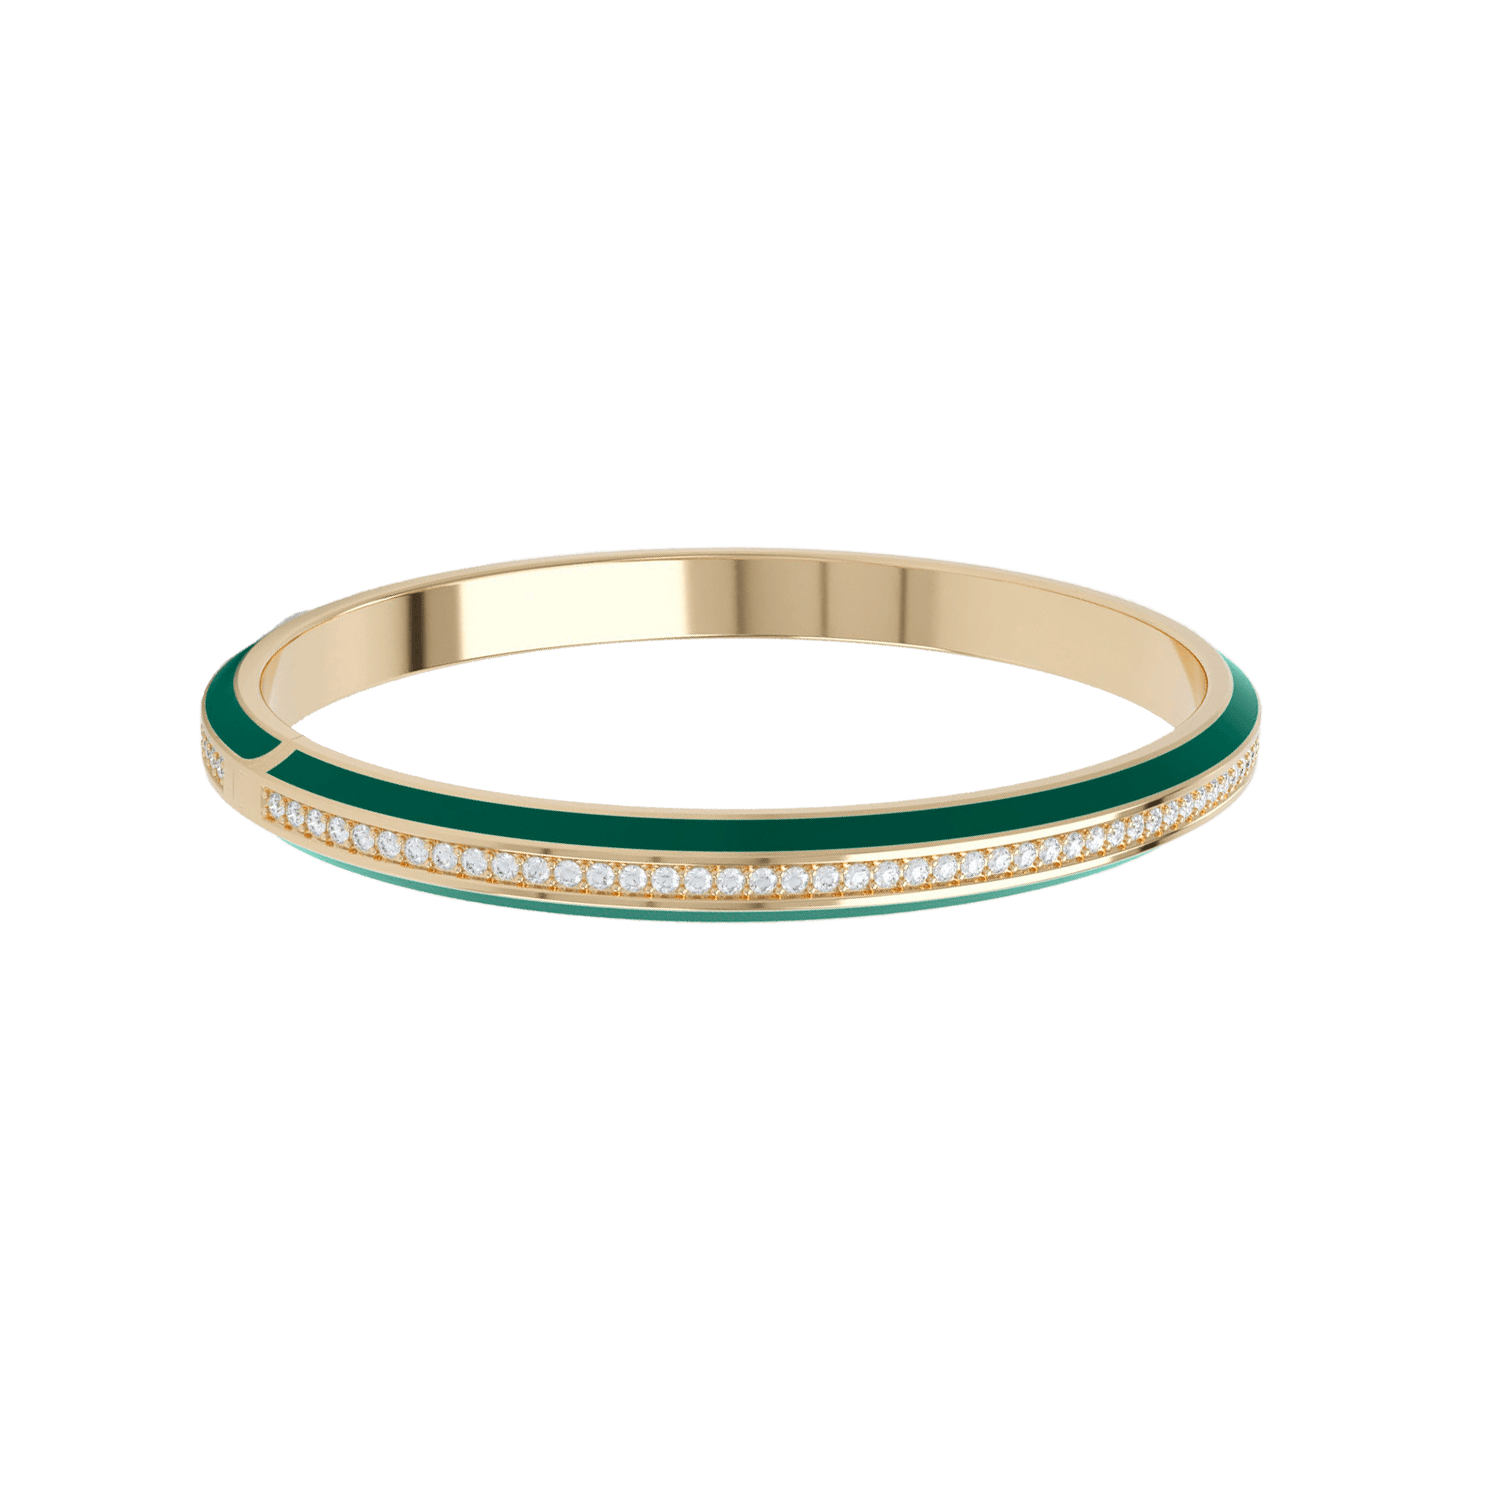 Hermès metal and enamel bracelet